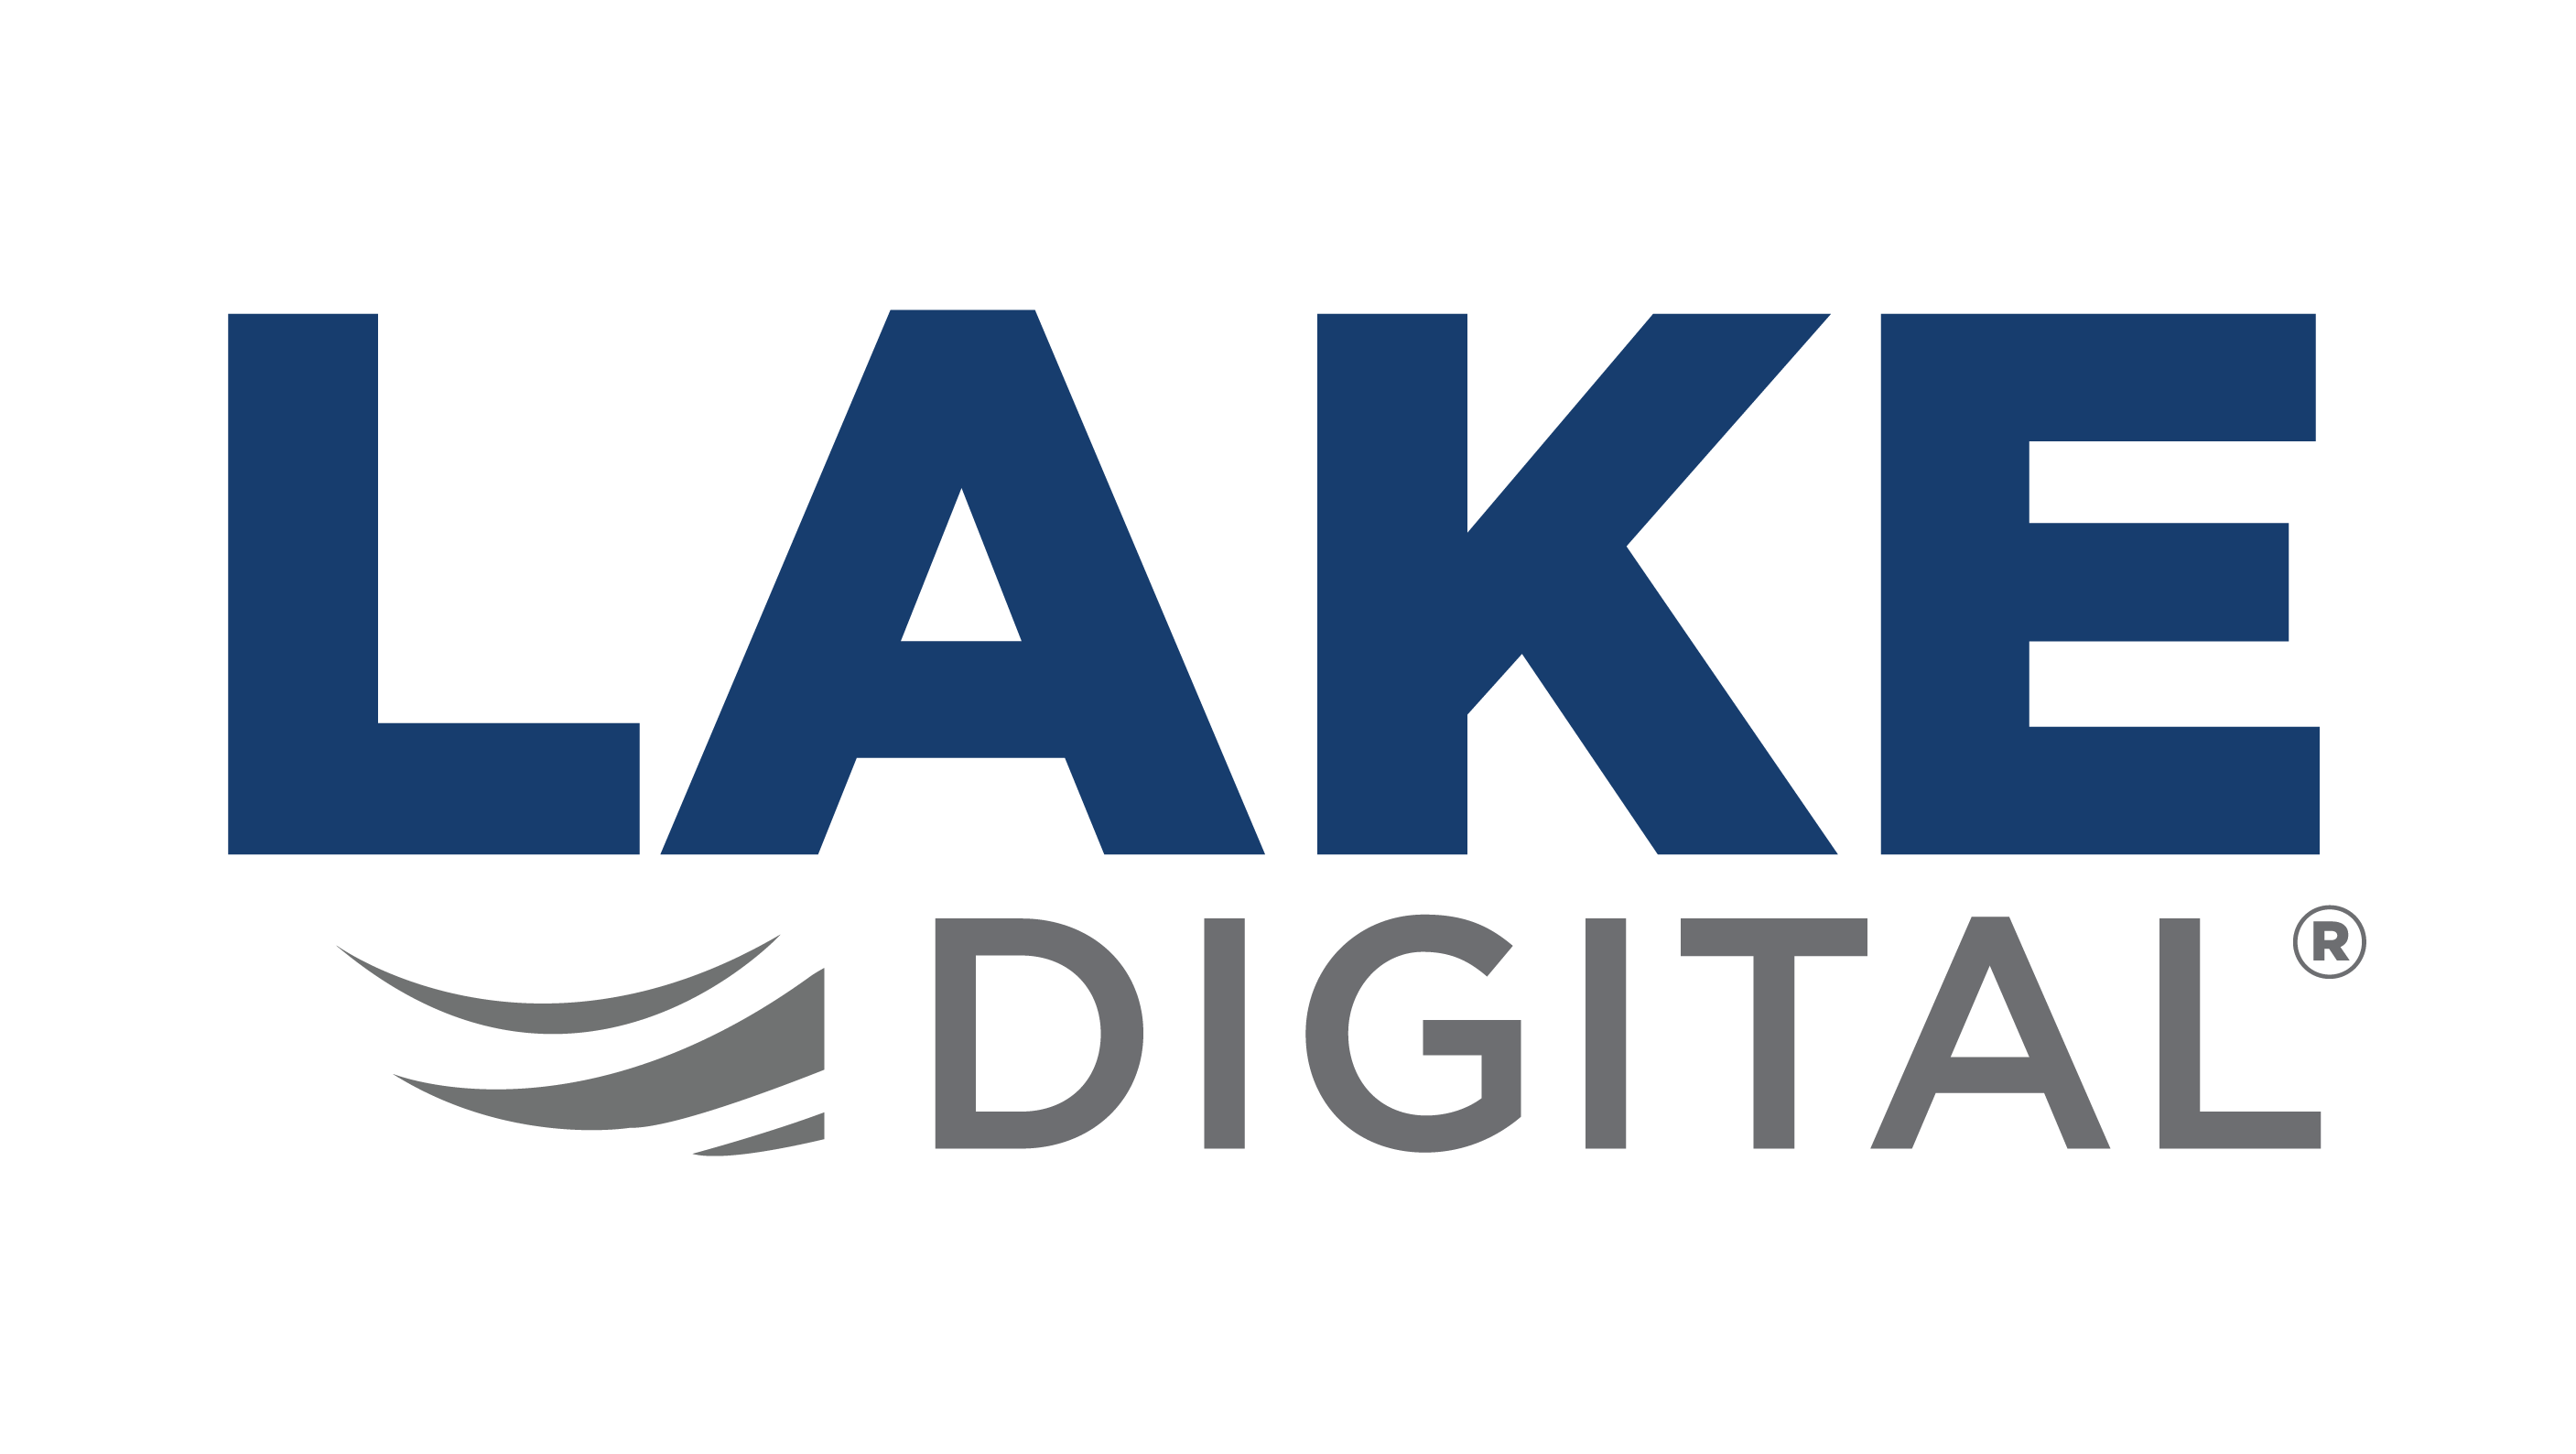 Lake Digital Logo